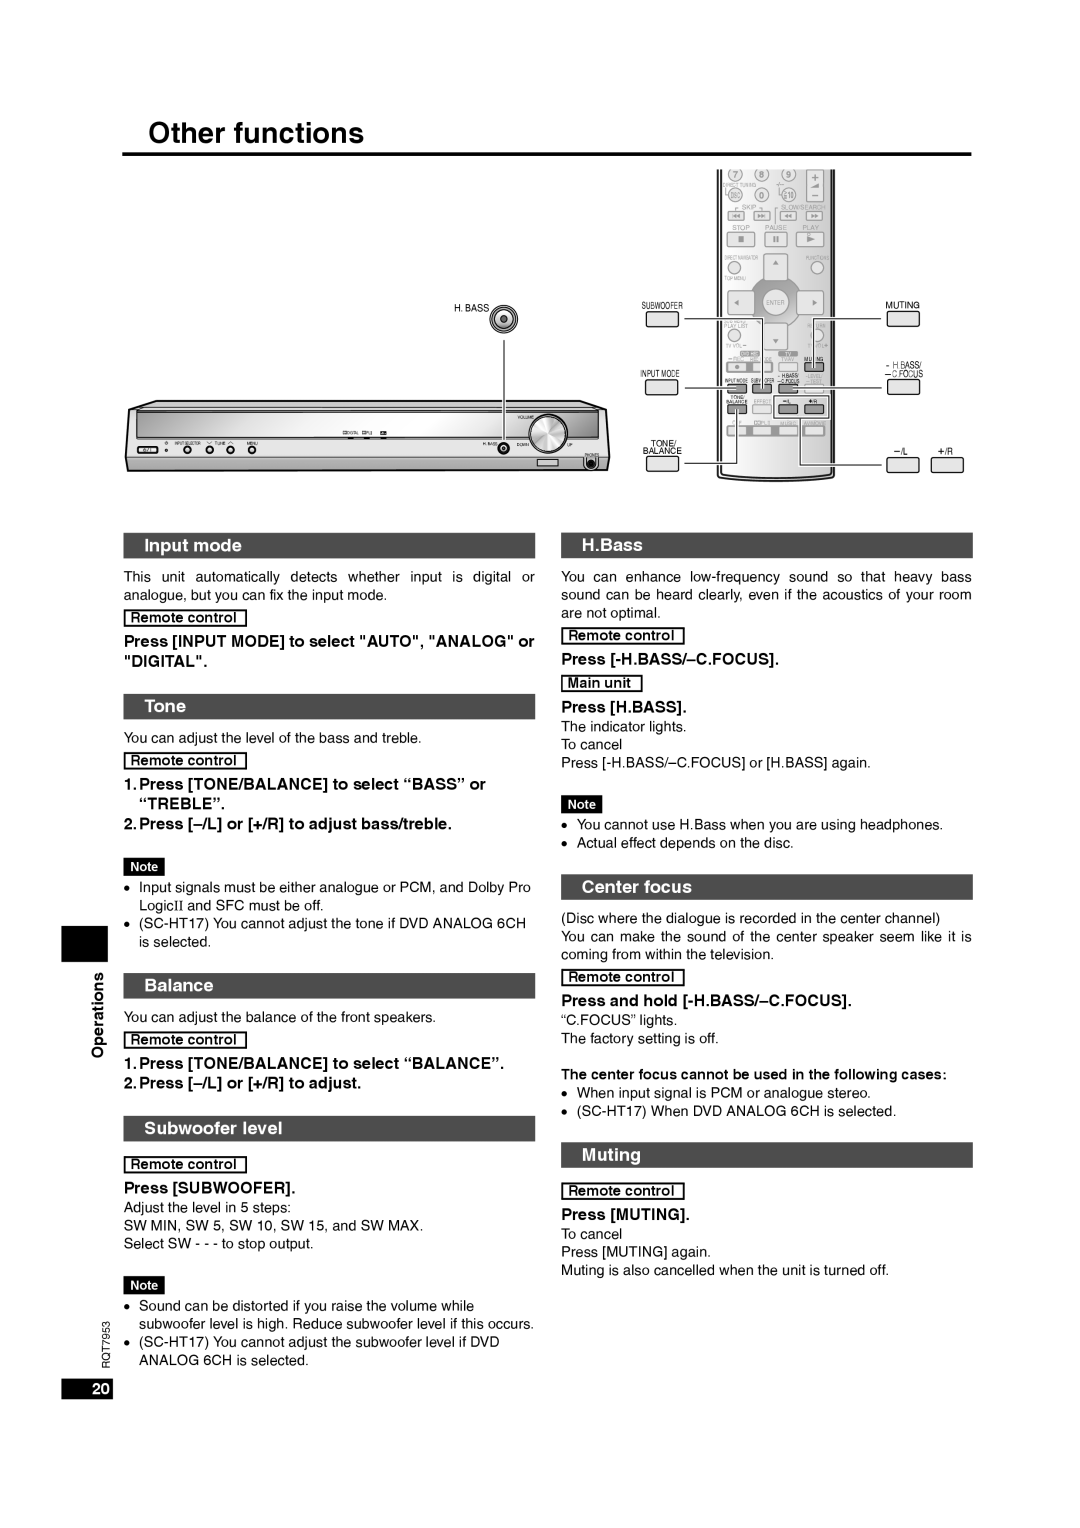 Panasonic SC-HT17 Other functions, Input mode, H.Bass, Tone, Balance, Center focus, Subwoofer level, Muting 